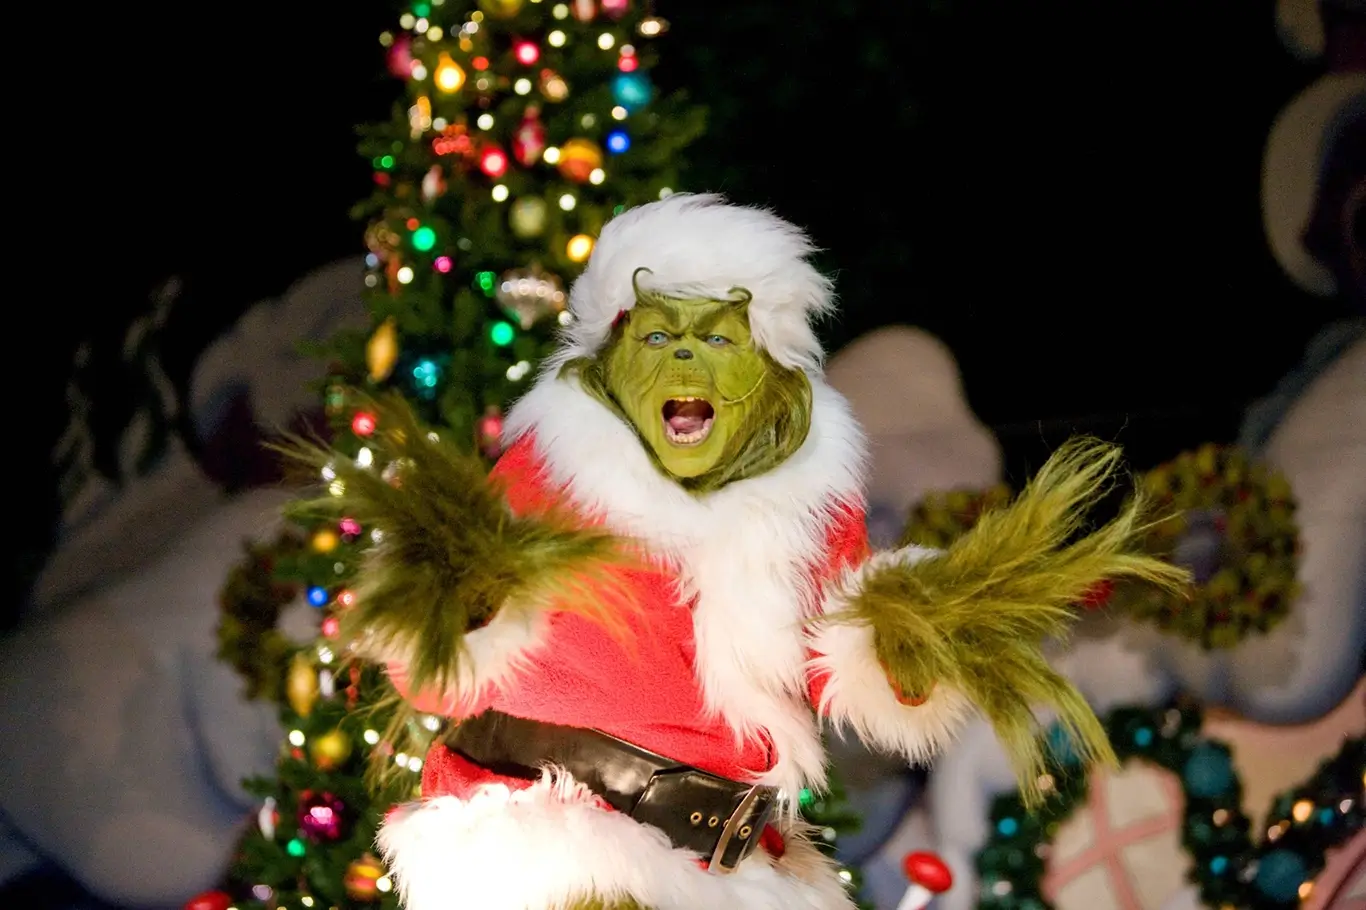 Universal Studios Hollywood Celebrates The Holidays Starting November 24